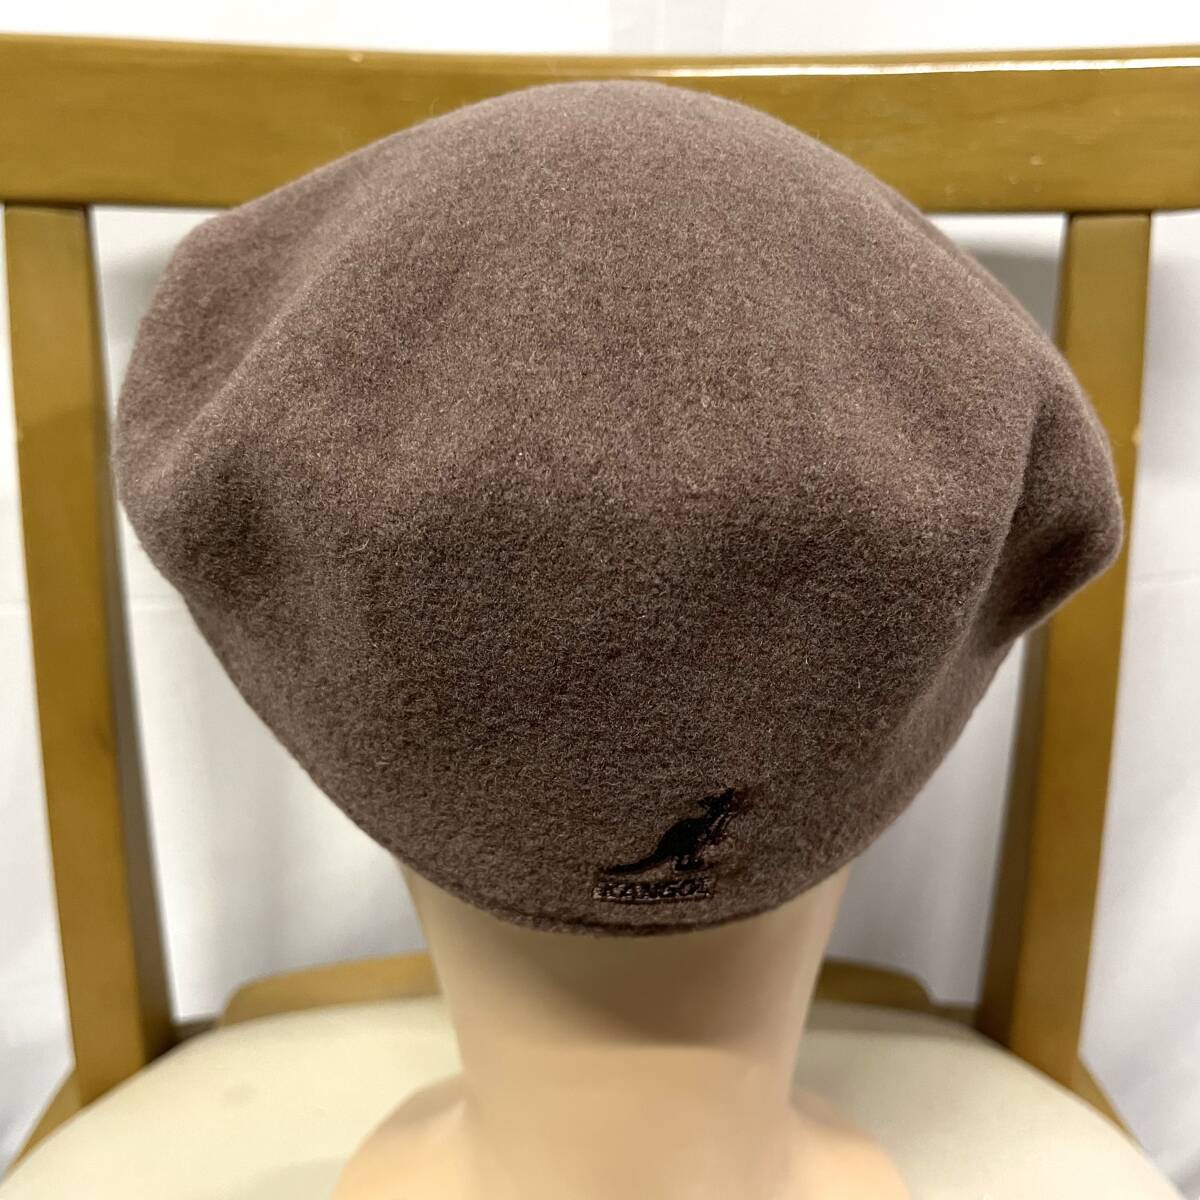 KANGOL Kangol шерсть кепка hunting cap колпак размер L шляпа 